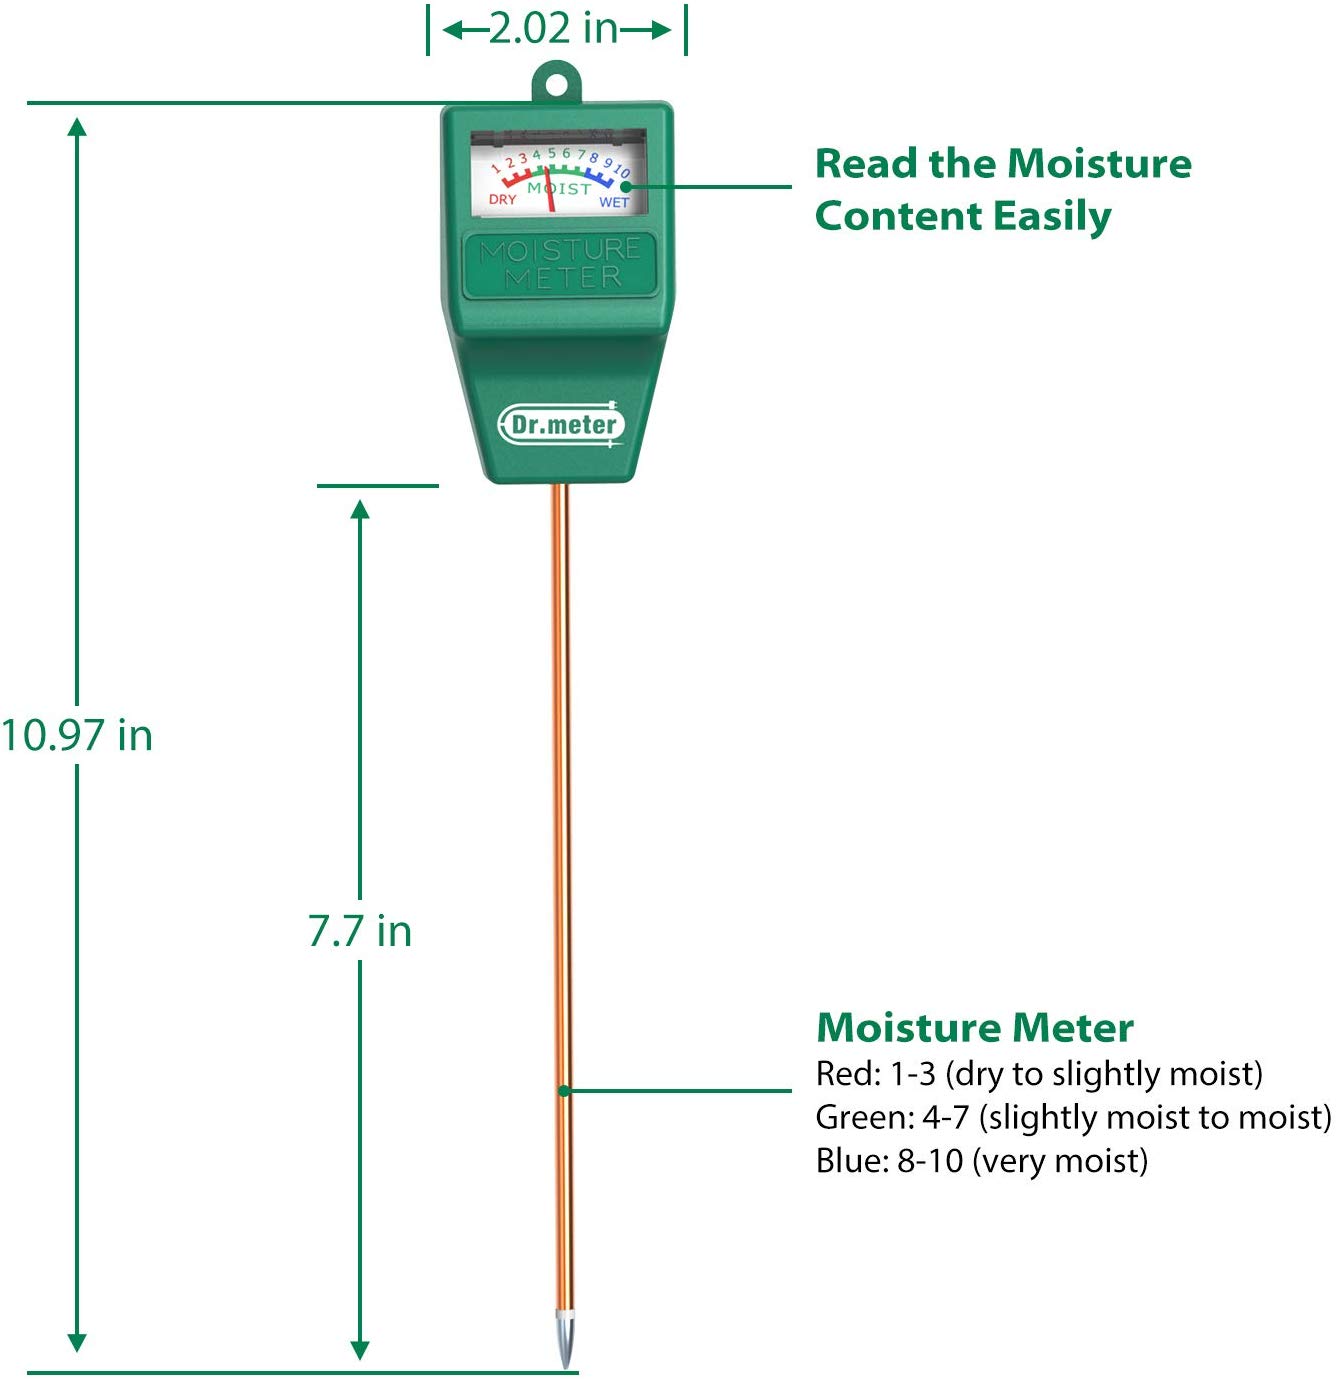 Professional Plant Soil Moisture Garden Sensor Moisture Monitor Detector  Soil Moisture Meter Alarm Hygrometer Humidity Meter